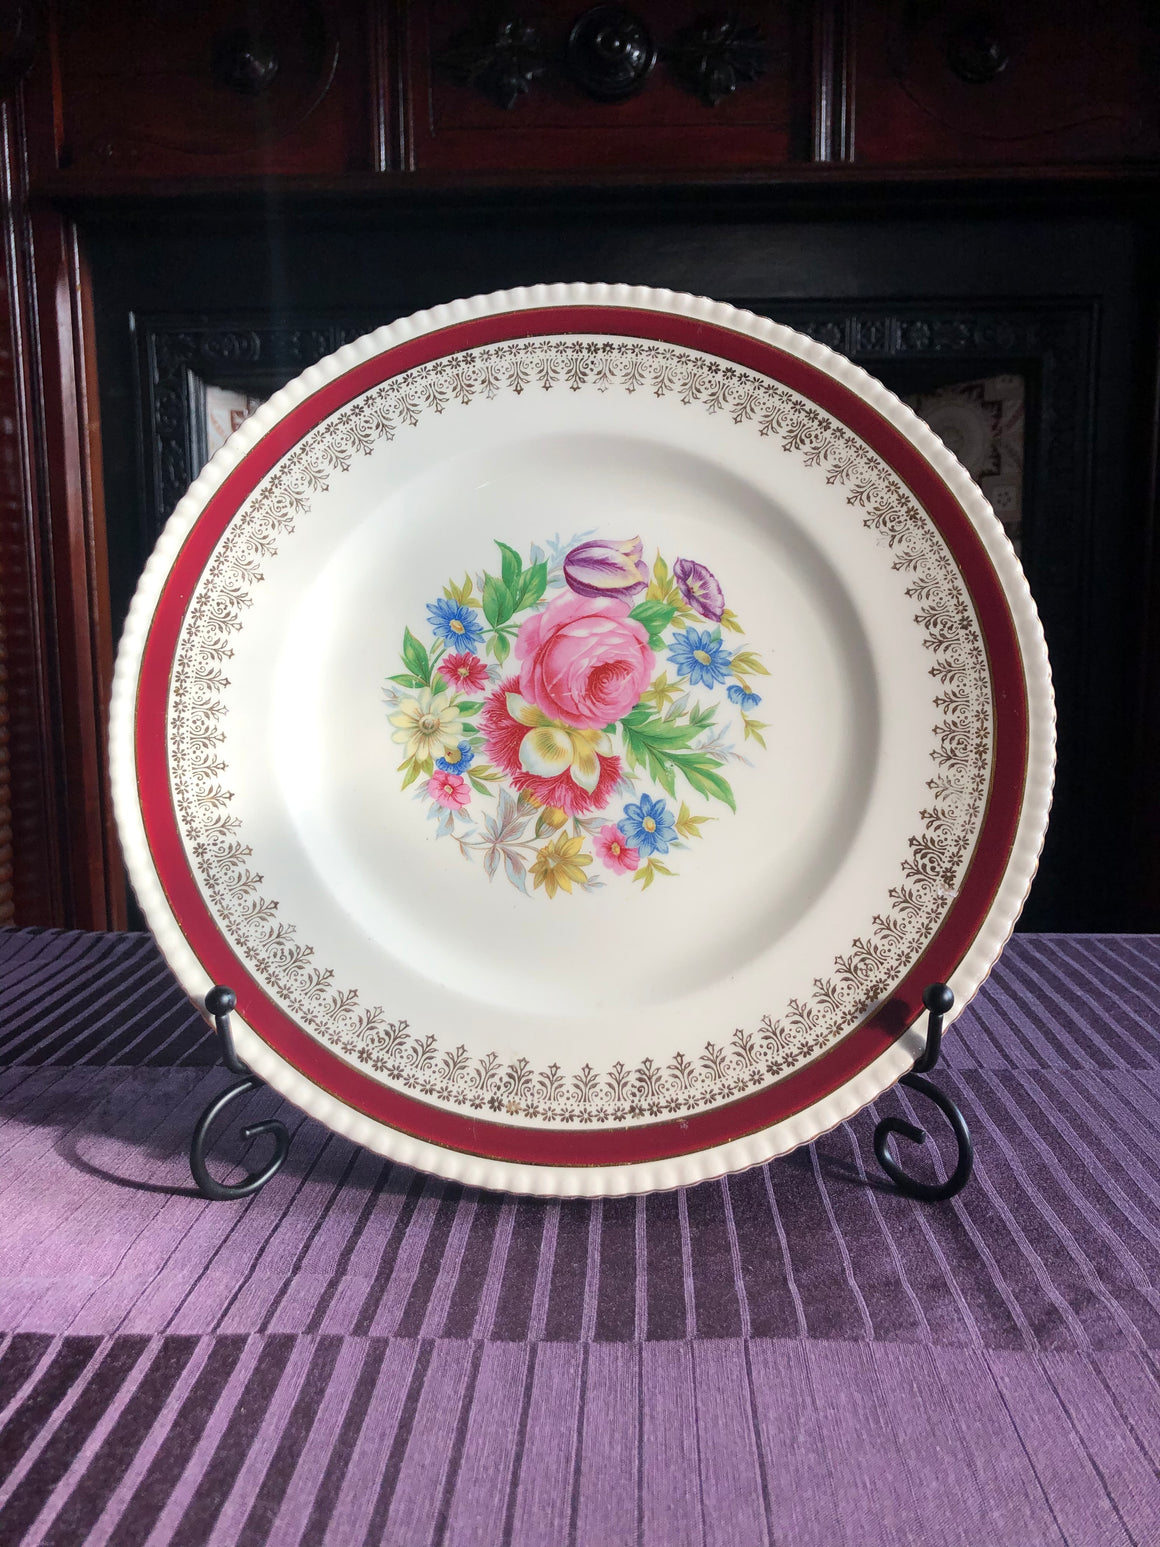 Decorative Solian Ware Simpsons Potters Ltd Cobridge England Plate